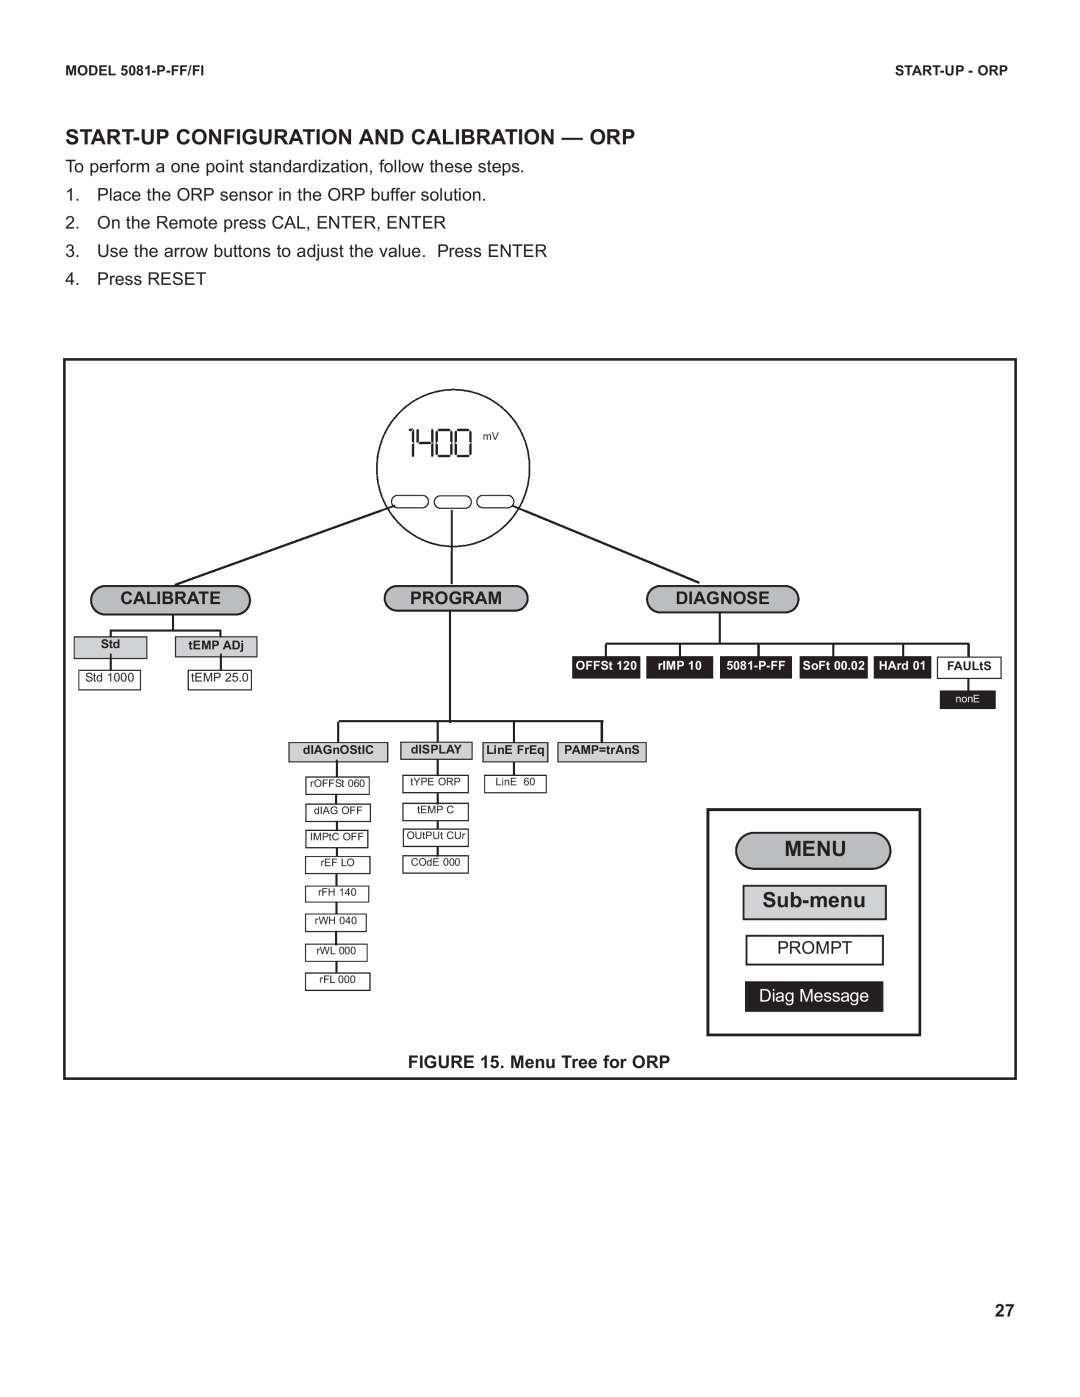 Emerson 5081-P-FF/FI Start-Upconfiguration And Calibration - Orp, Menu Tree for ORP, 2511 mV, Sub-menu, Calibrate, Program 